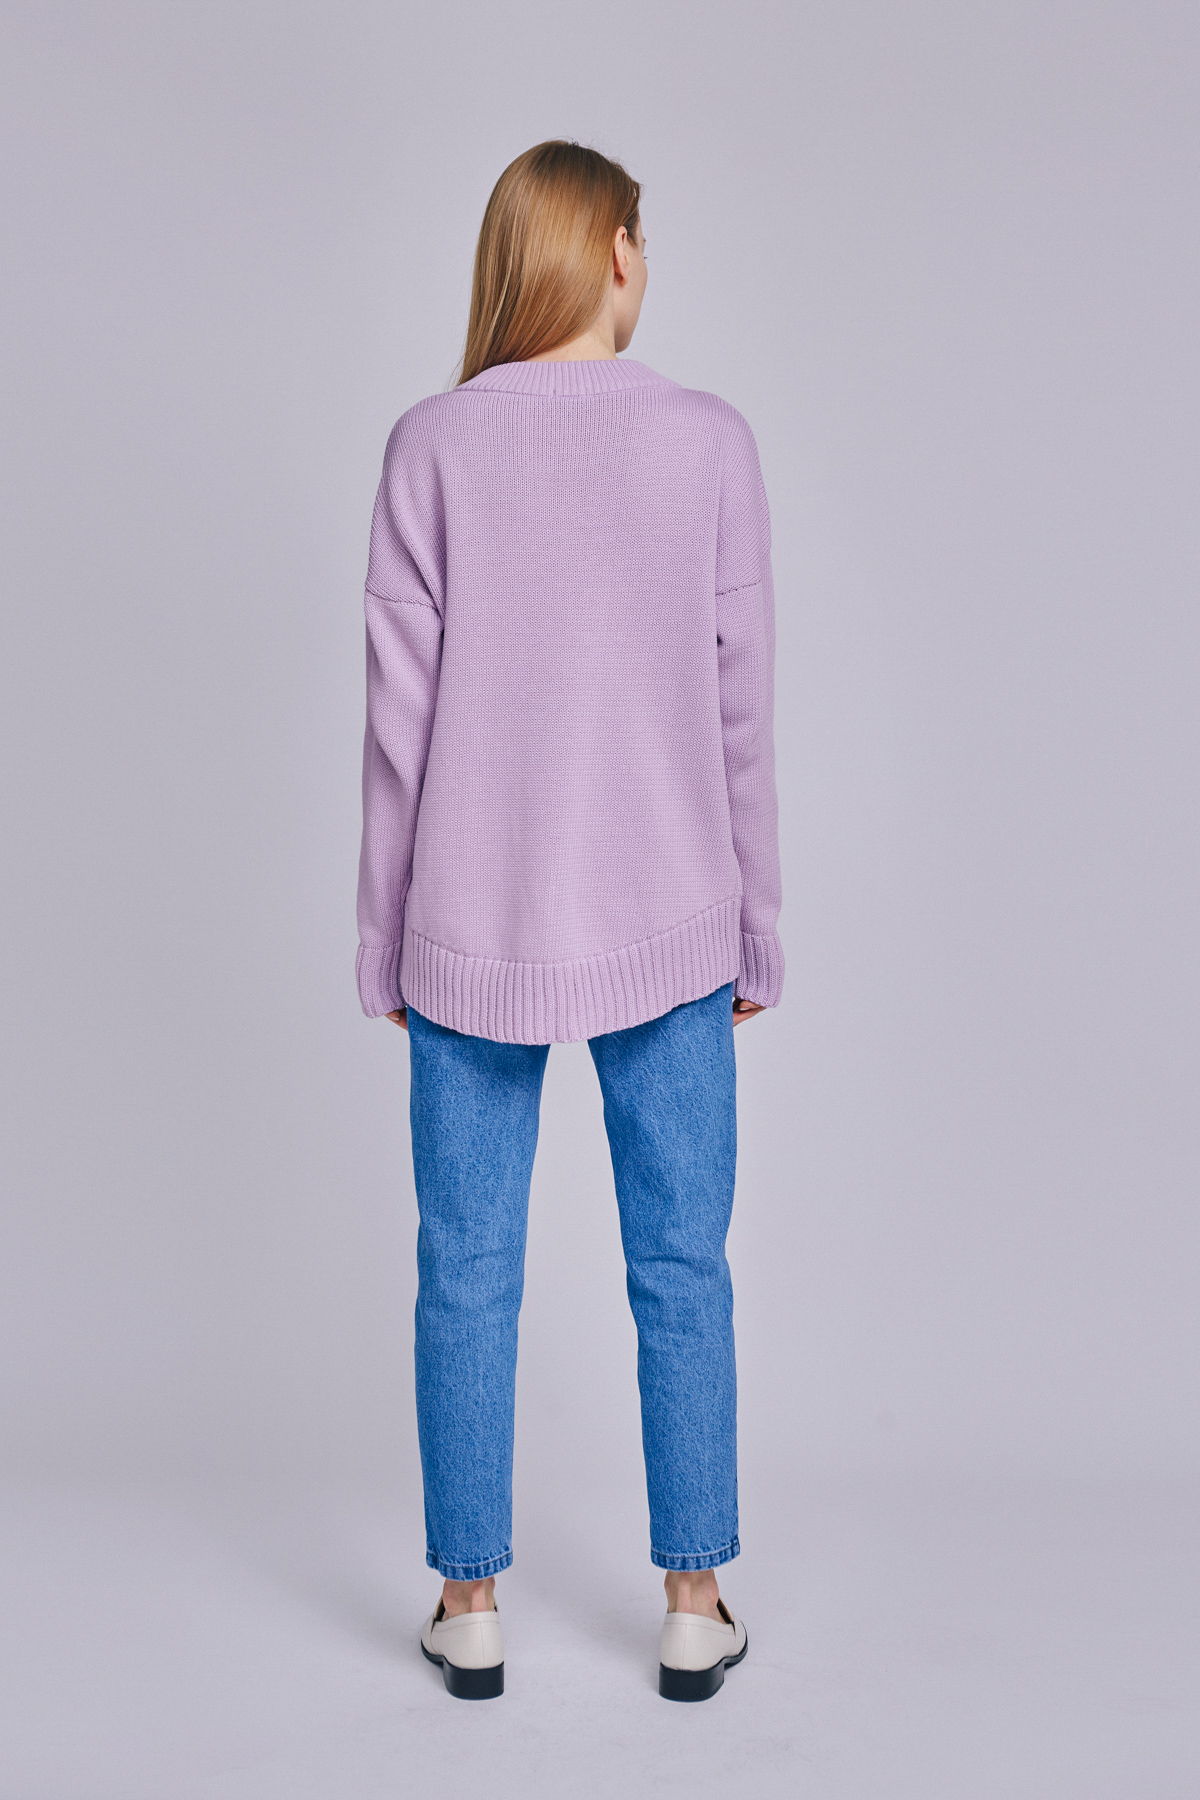 Purple knitted cotton sweater, photo 5